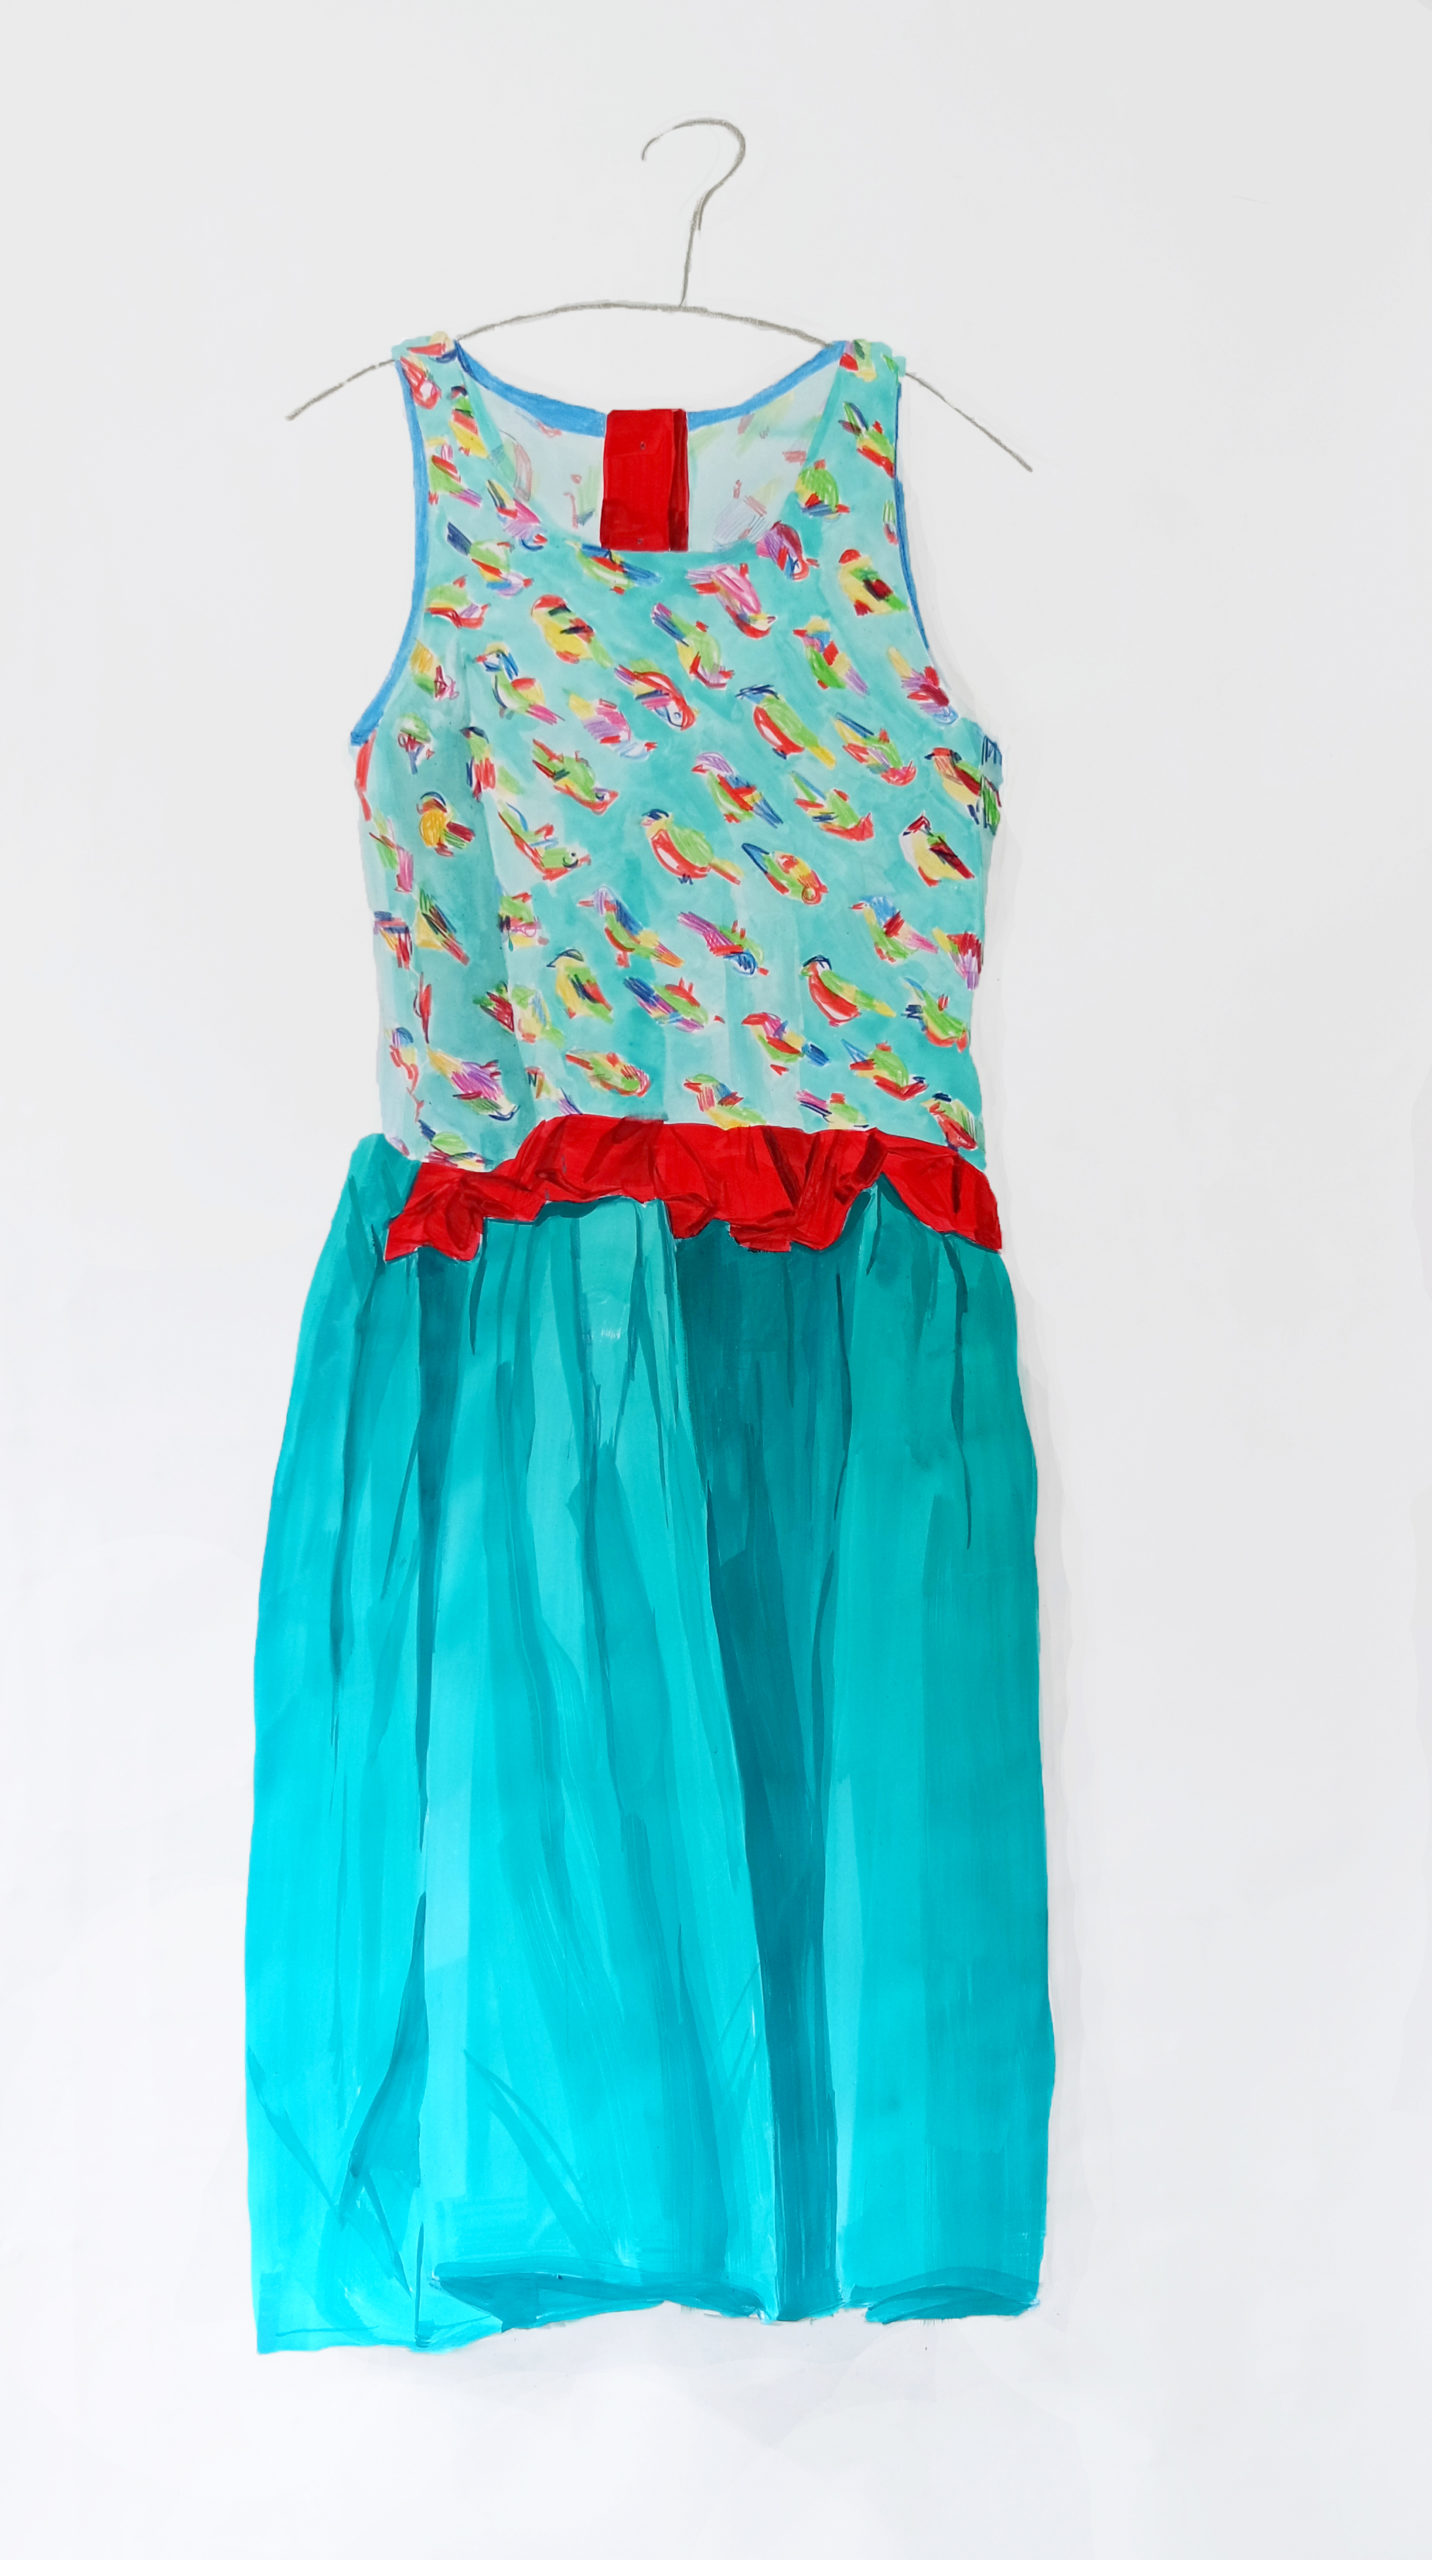 Britt Dorenbosch Mijn kleurenleer kinderkleding jurk turqoise